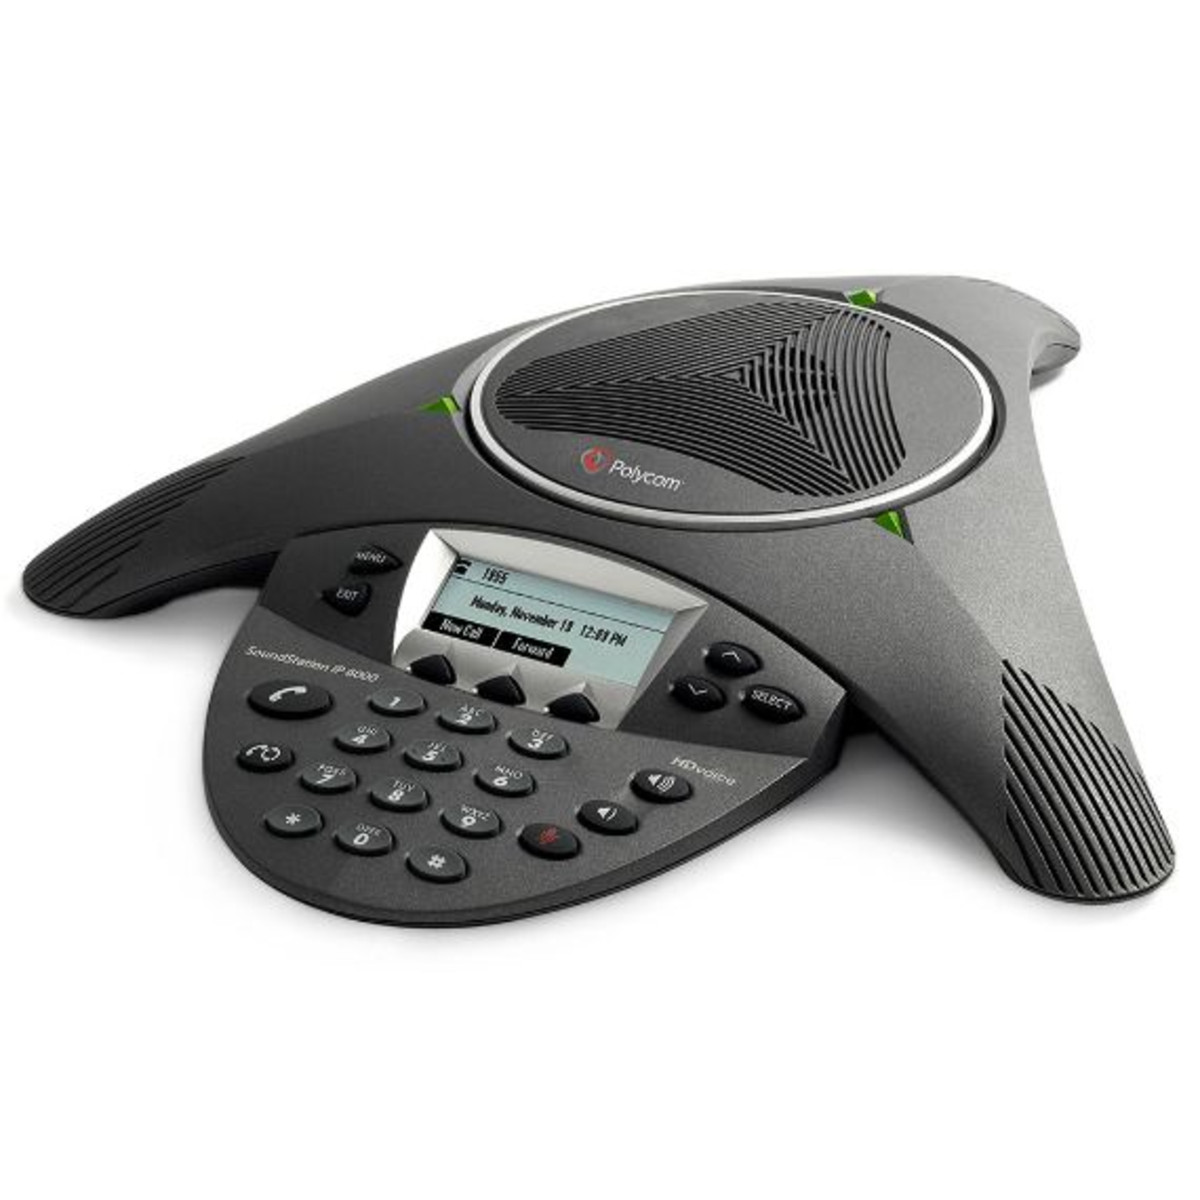 Polycom Soundstation IP 6000 Conference Phone (p/n- 2200-15600-001)